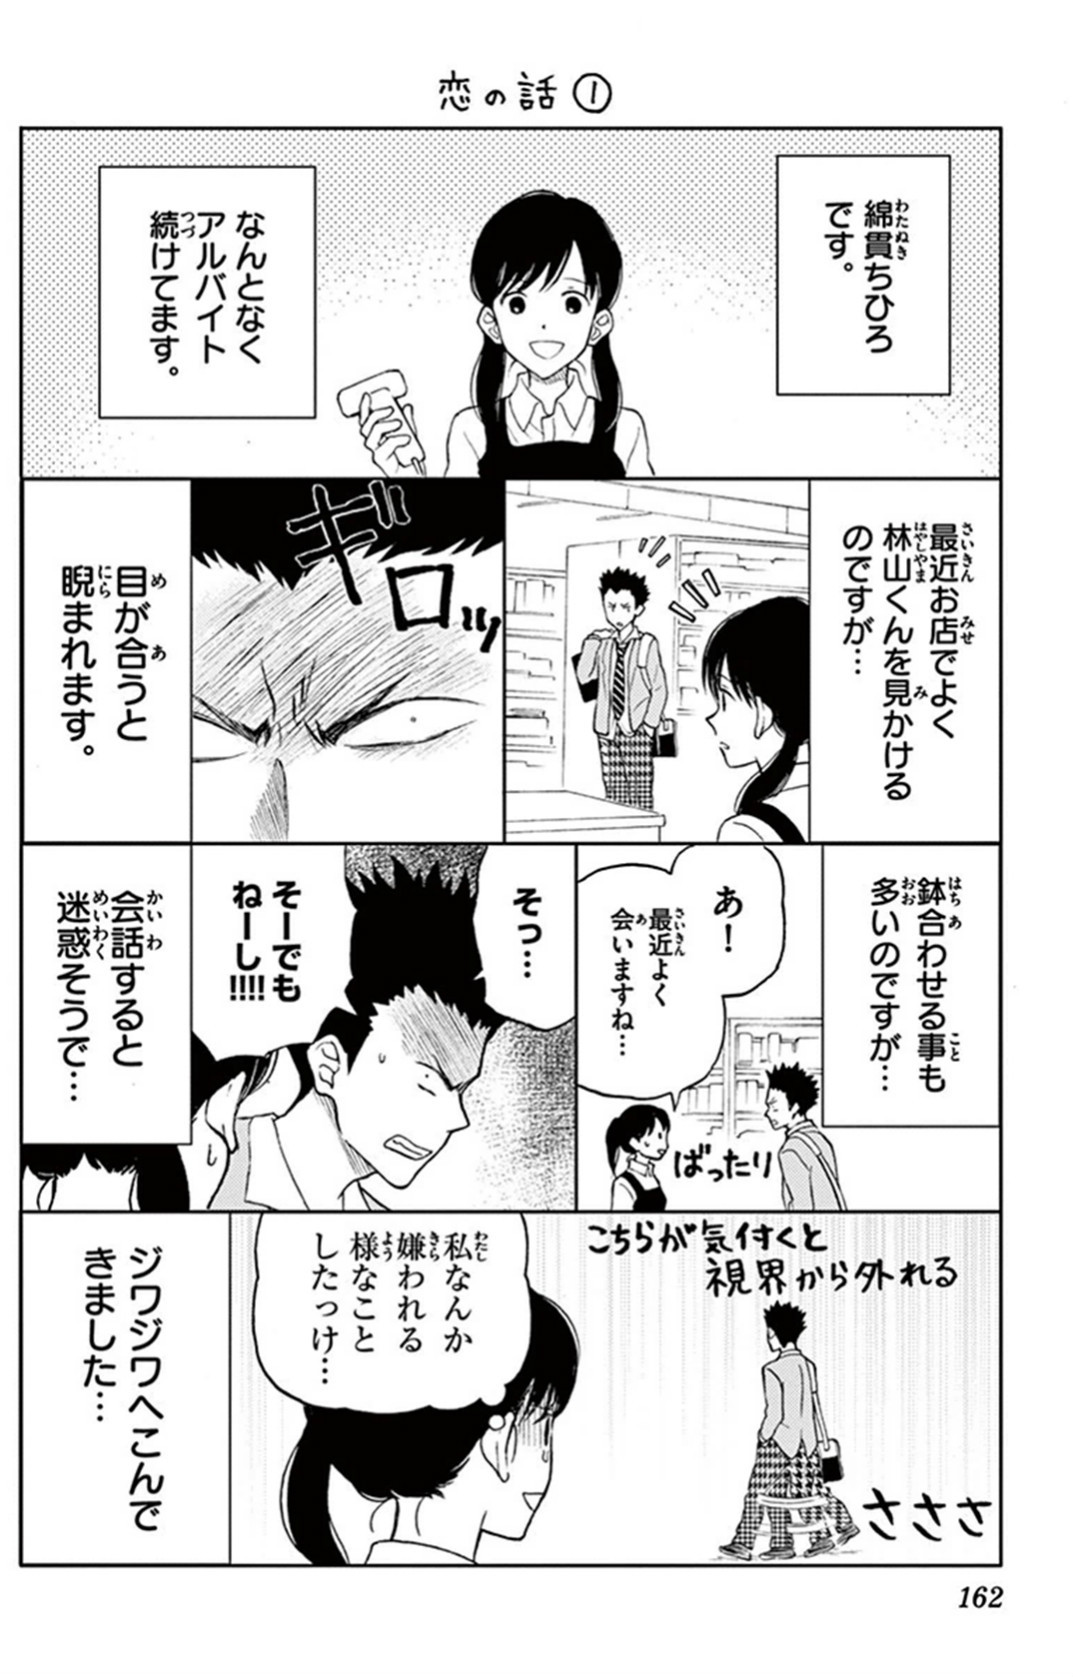 Yugami-kun ni wa Tomodachi ga Inai - Chapter 026.5 - Page 1